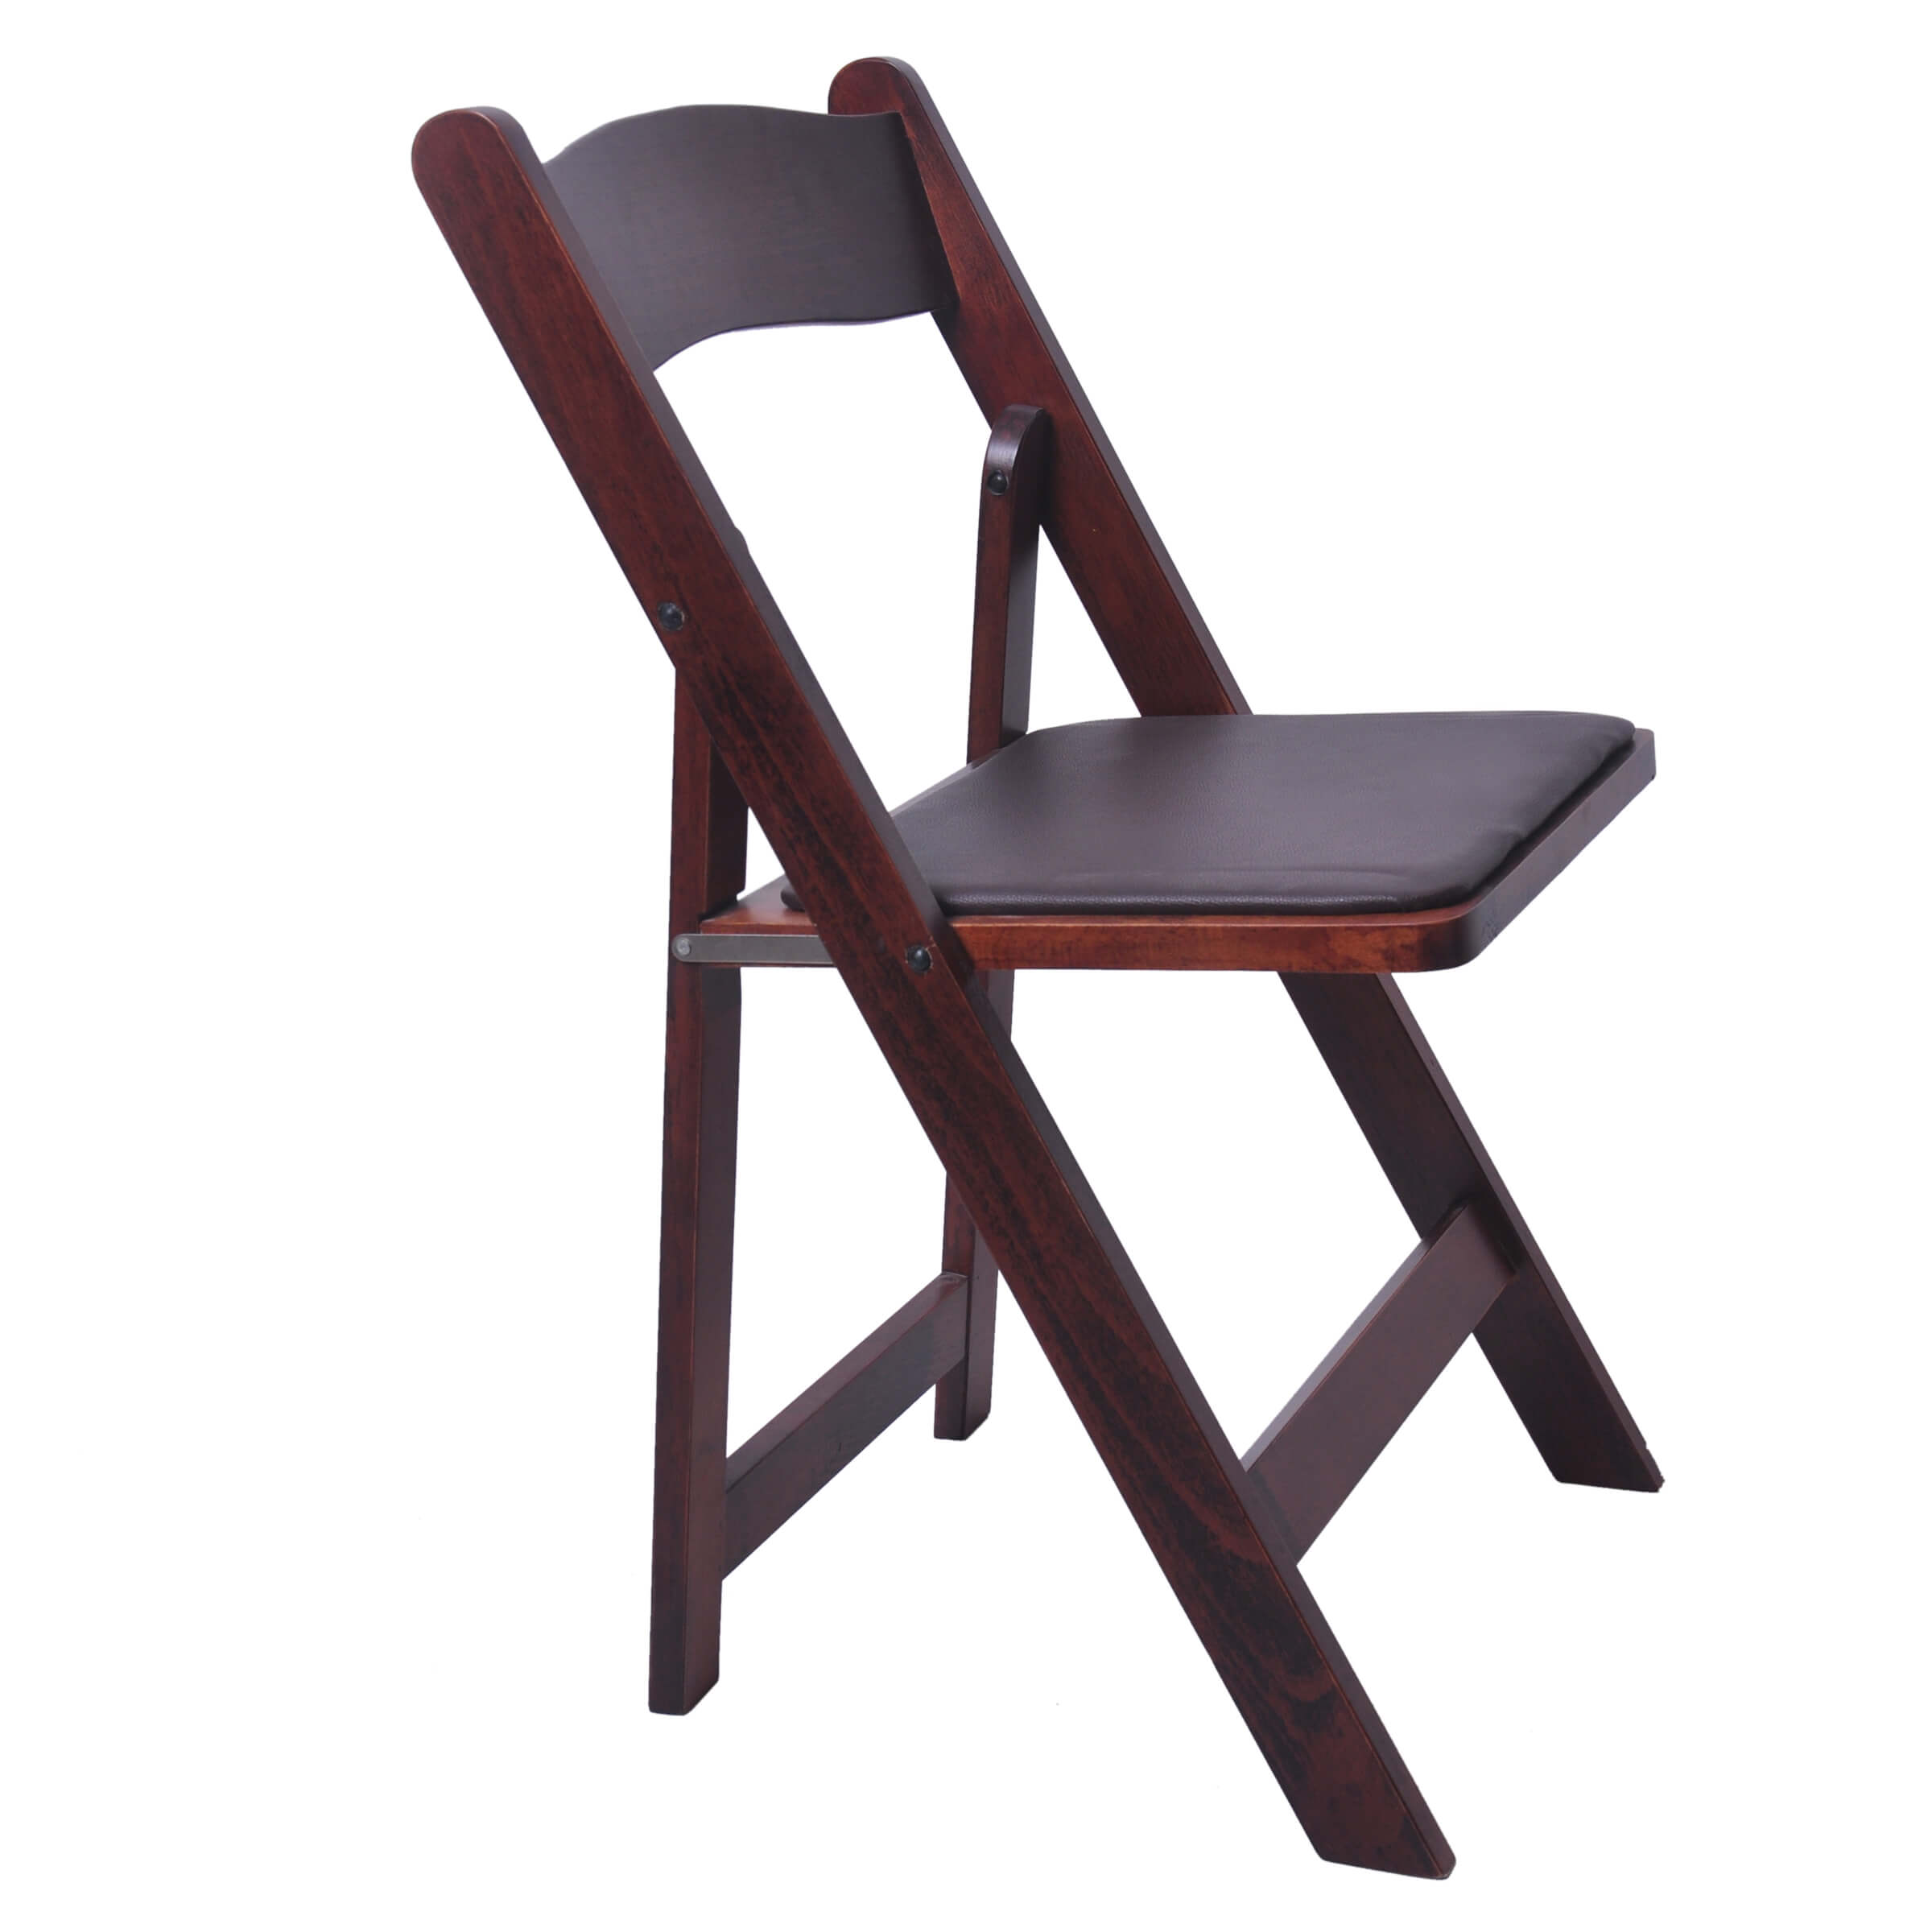 https://blossomfurnishings.com/wp-content/uploads/2014/09/wooden-wimbledon-chair-factory.jpg